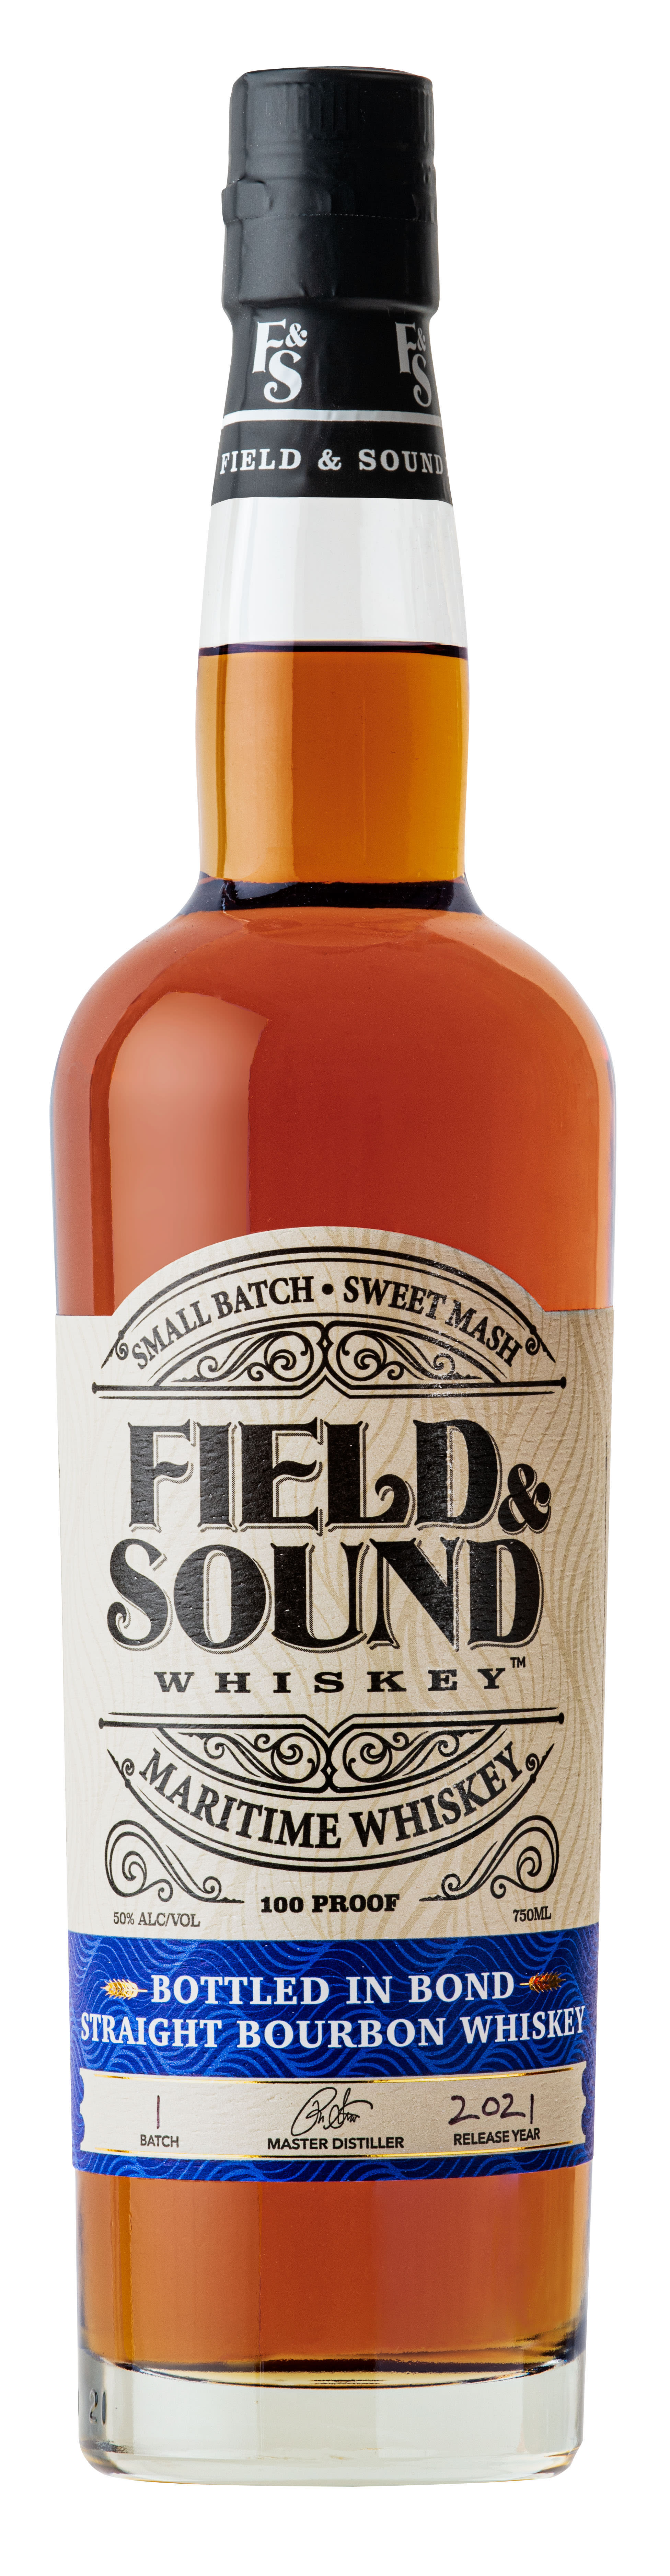 Field & Sound Straight Bourbon Whiskey, Bottled in